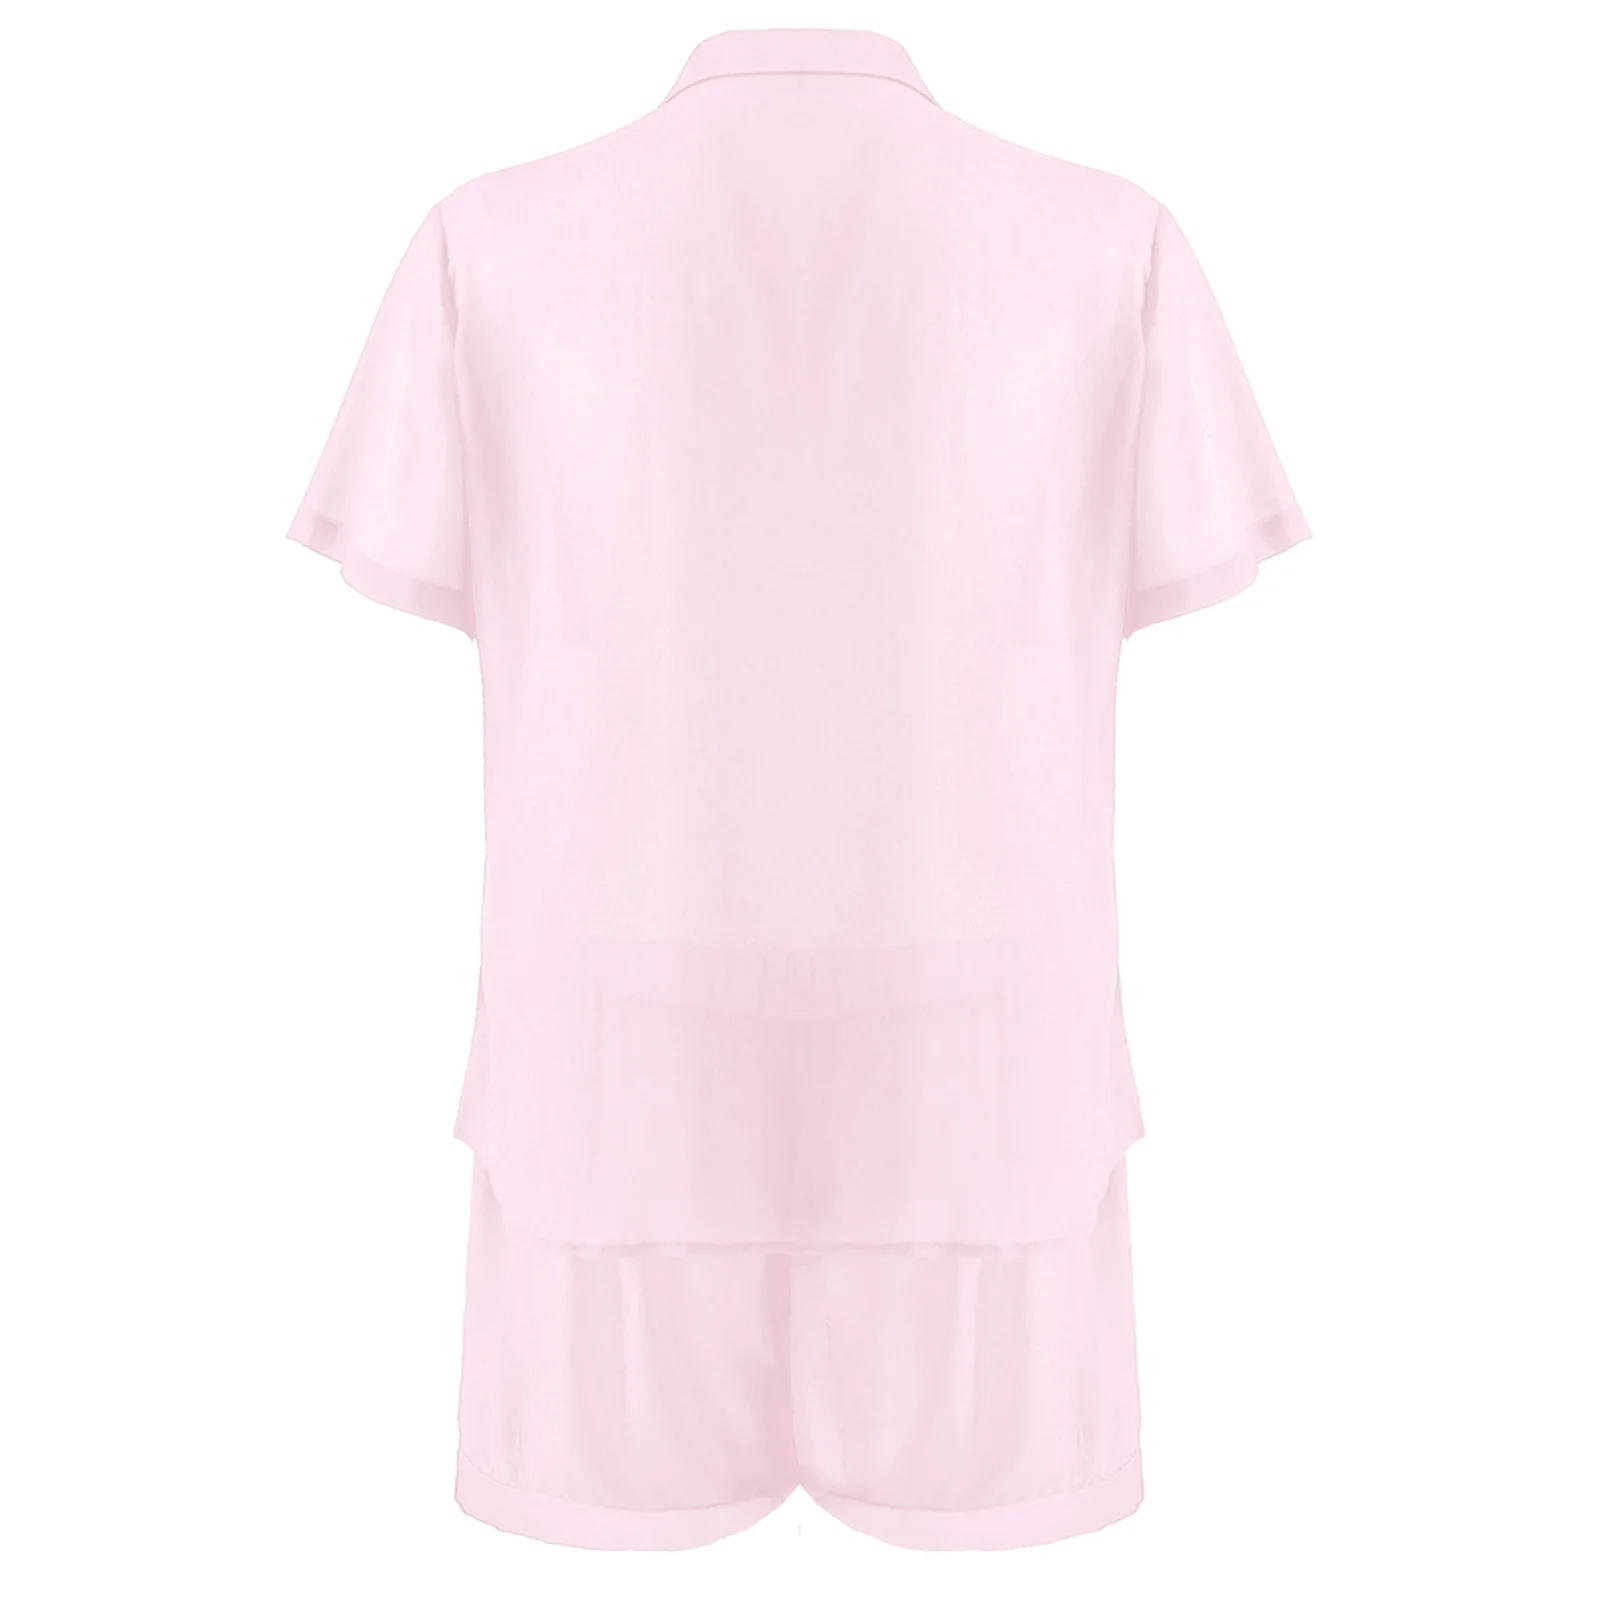 Mens Male Pajama Set See-through Sissy Nightwear Sleepwear Satin Patchwork Chiffon Lapel Short Sleeve Button Tops with Shorts mens pajama pants